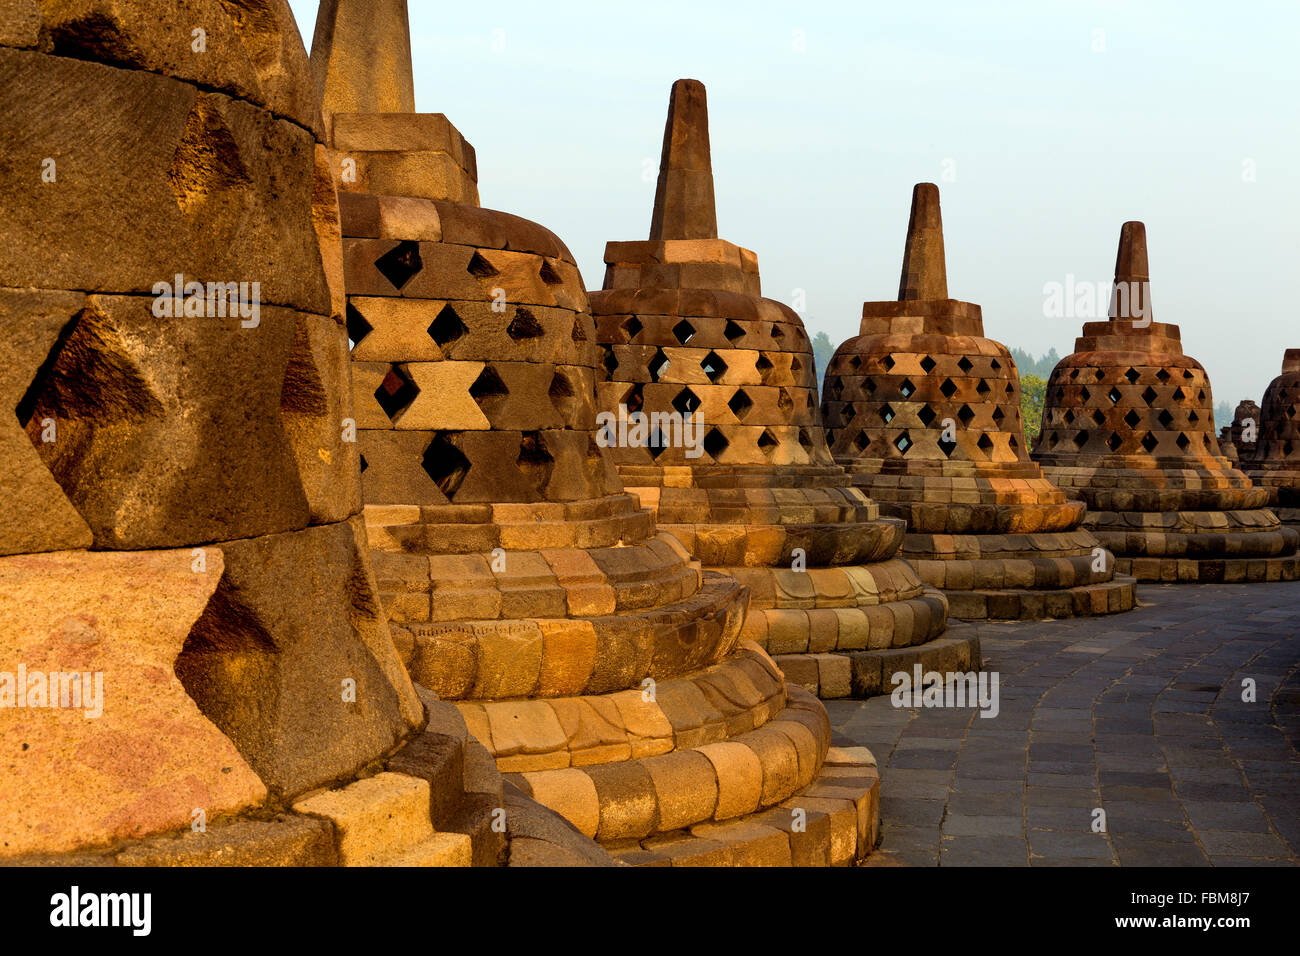 The beautiful stupas of Borobudur Temple complex, Yogyakarta, Indonesia. Stock Photo